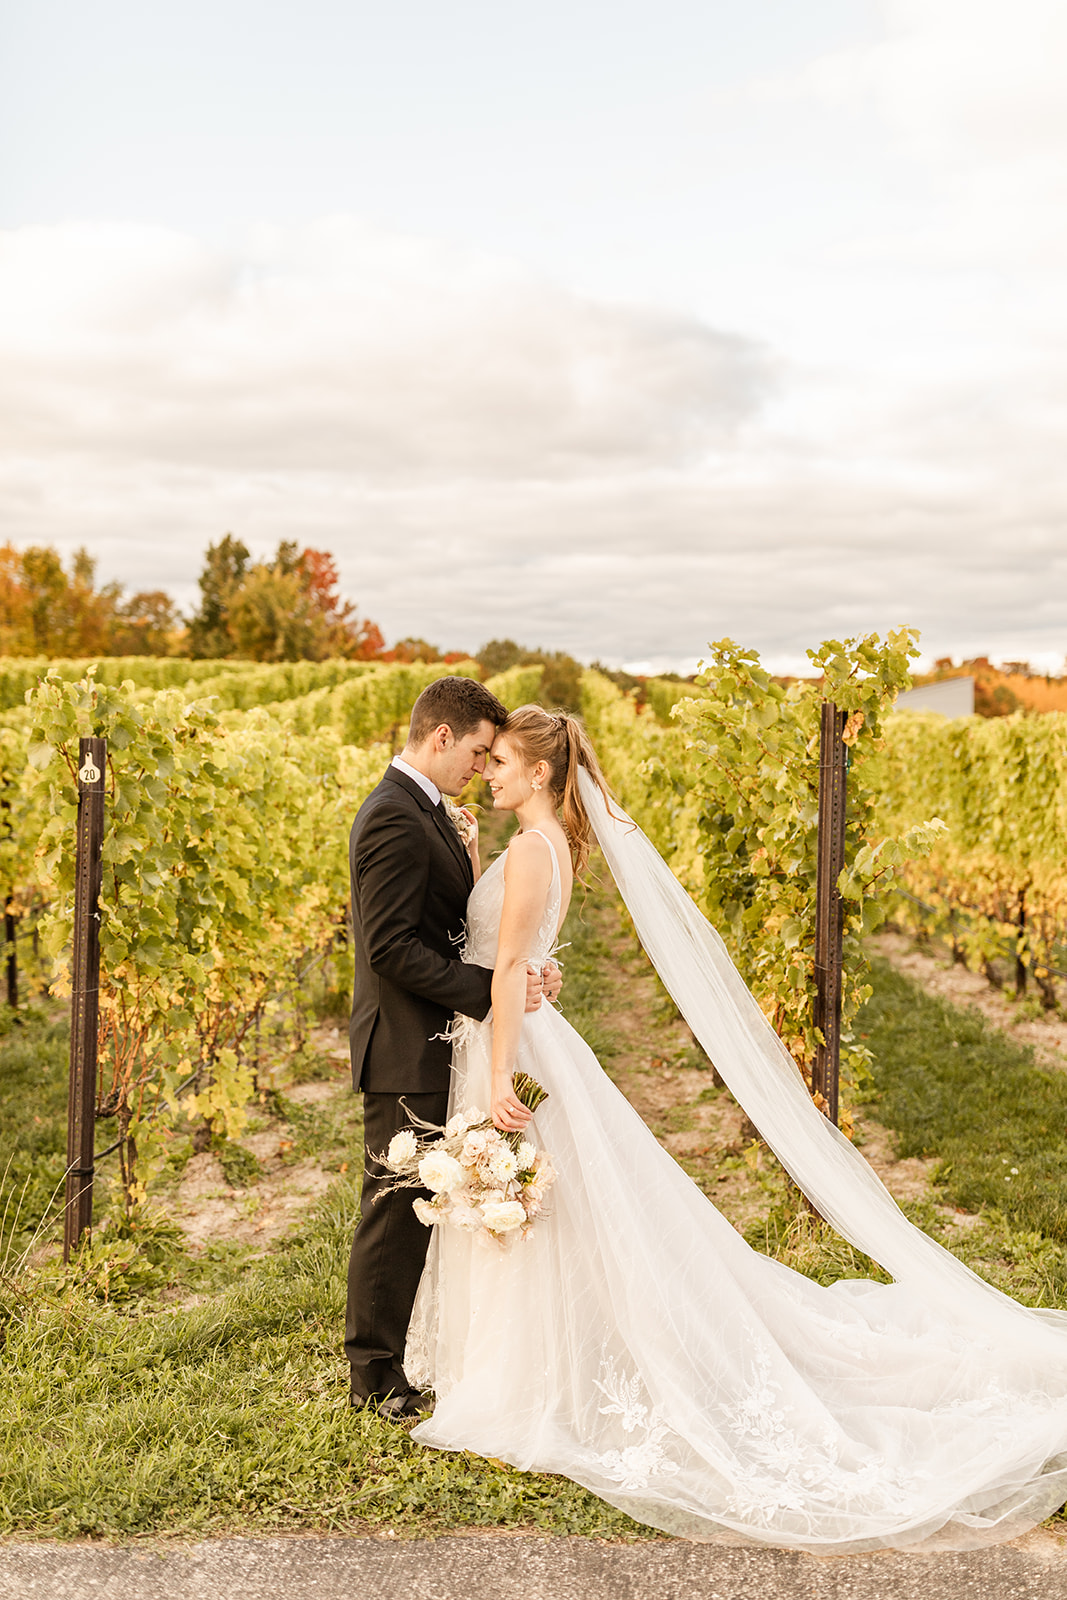 Bride and groom wedding photos in Northern Michigan vineyard elopement